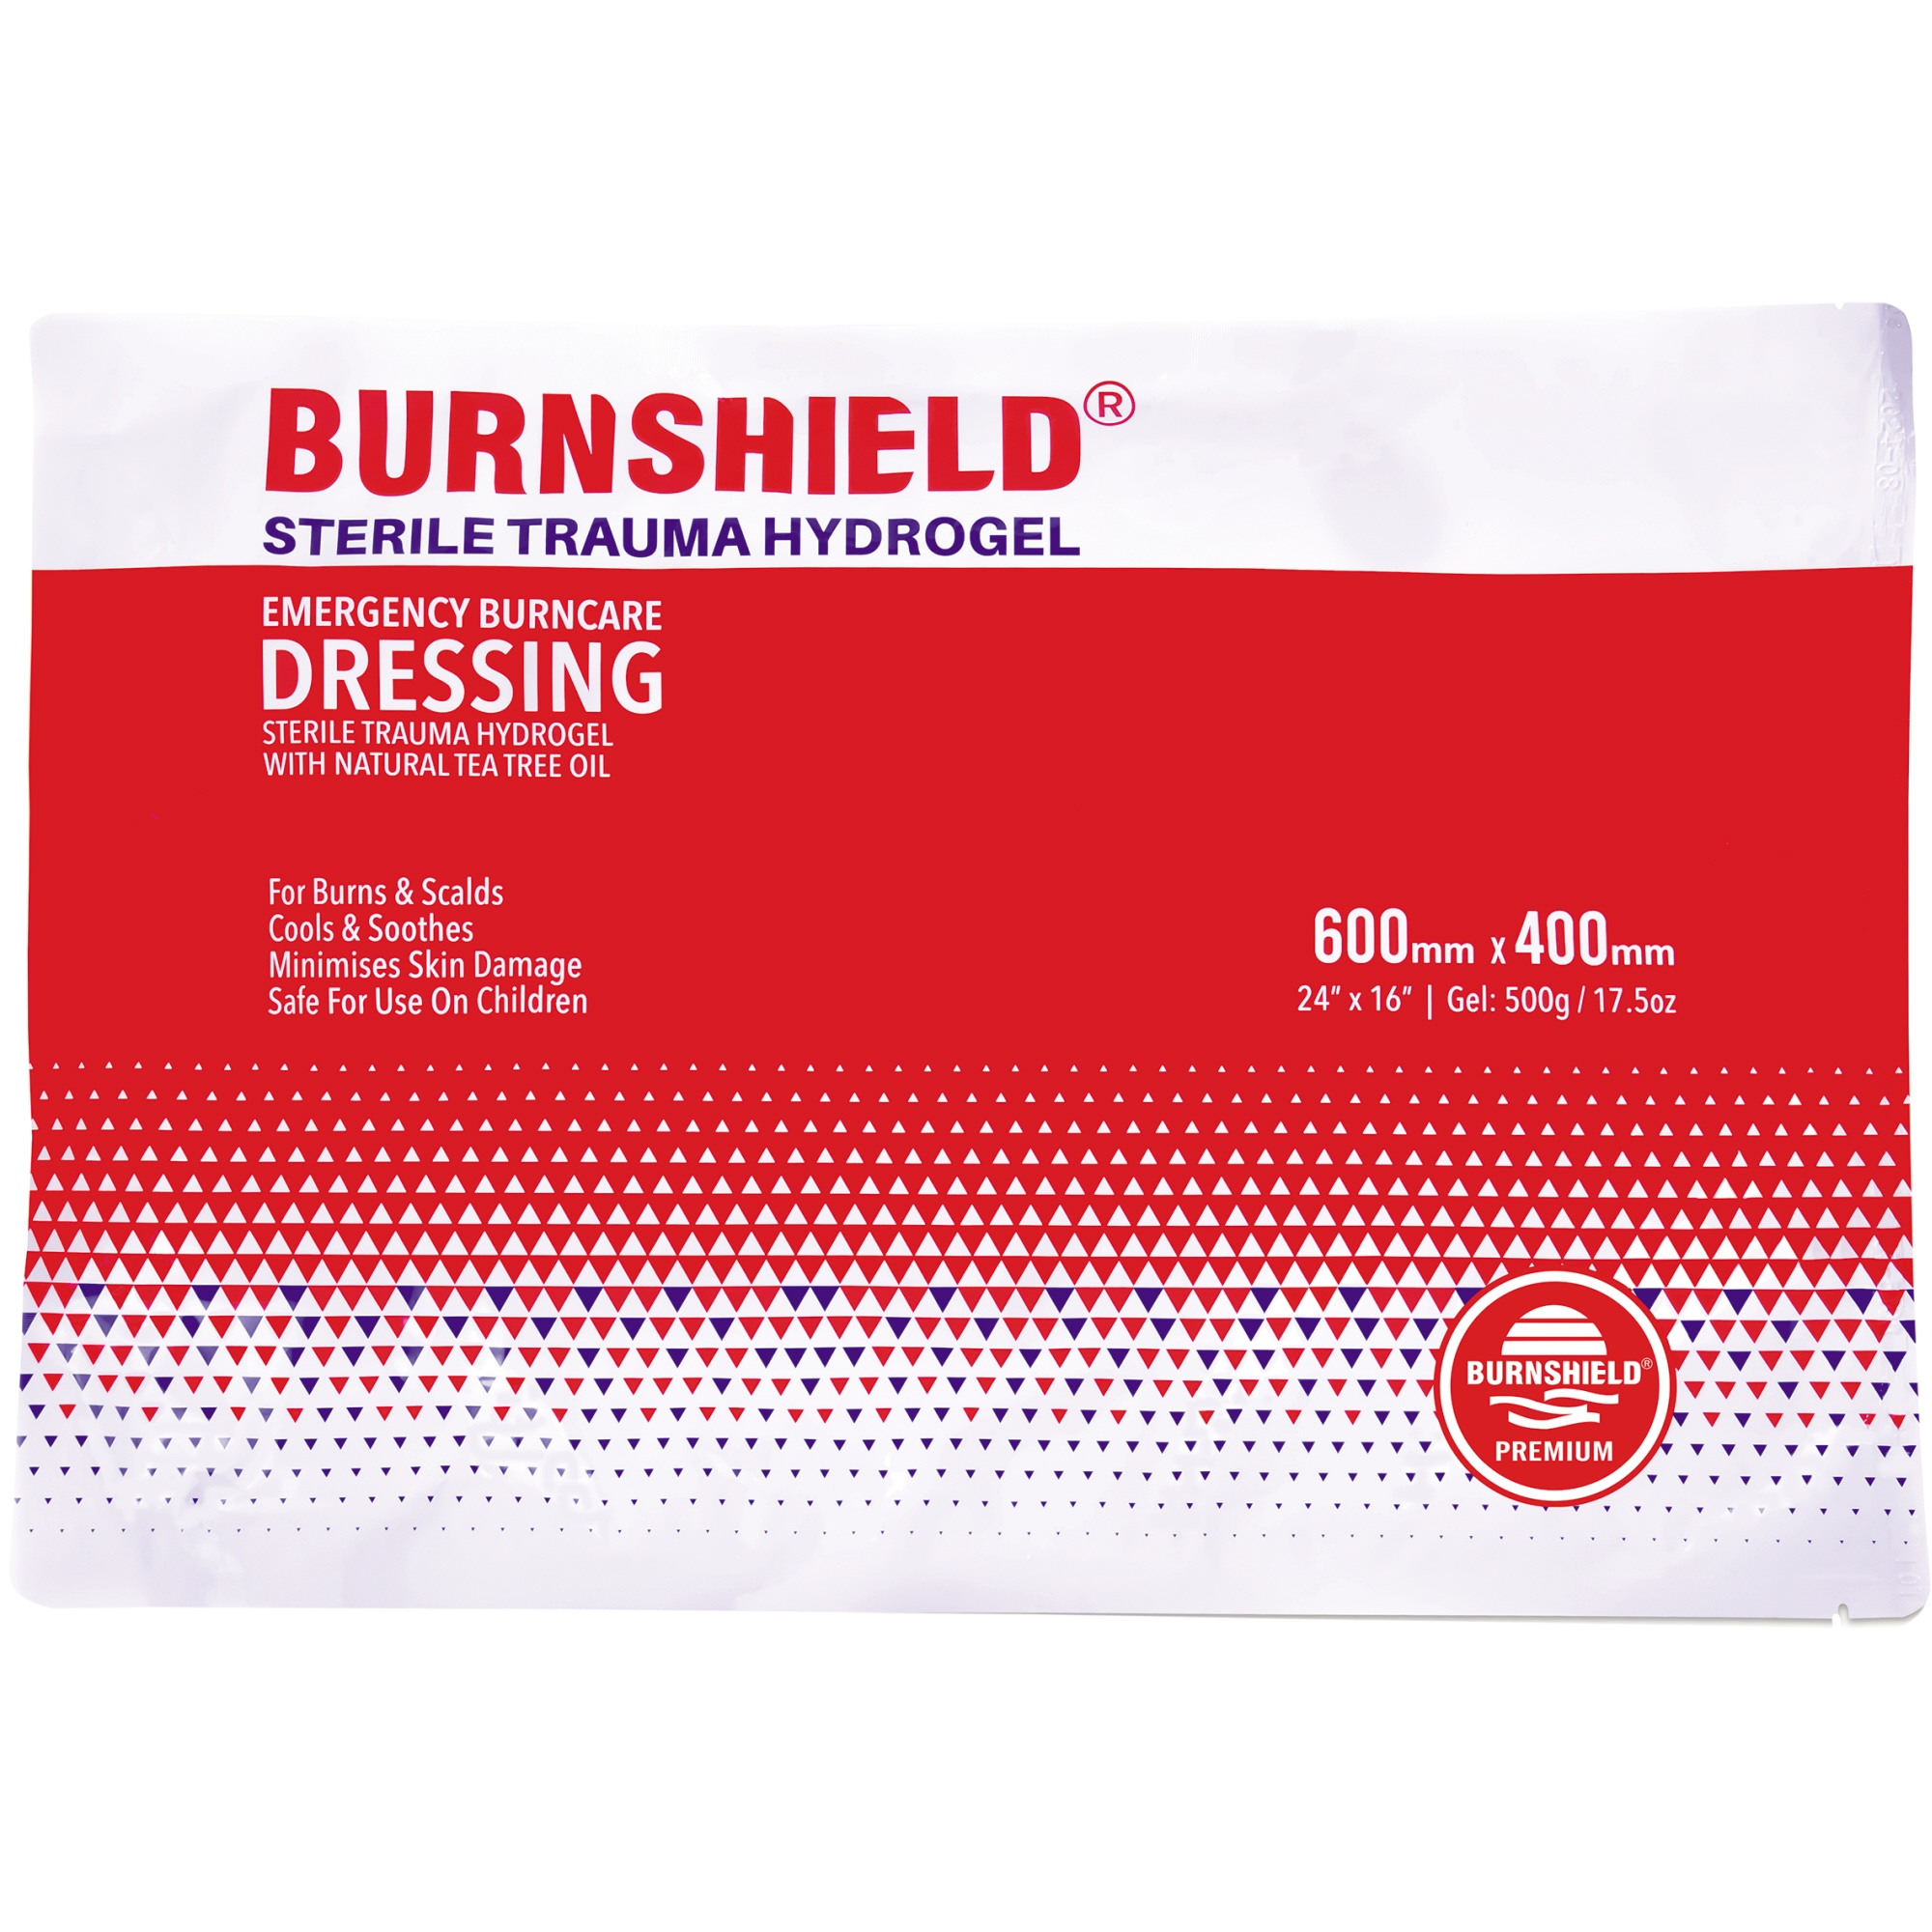 Burnshield Kompresse EMERGENCY BURNCARE DRESSING 60 x 40 cm